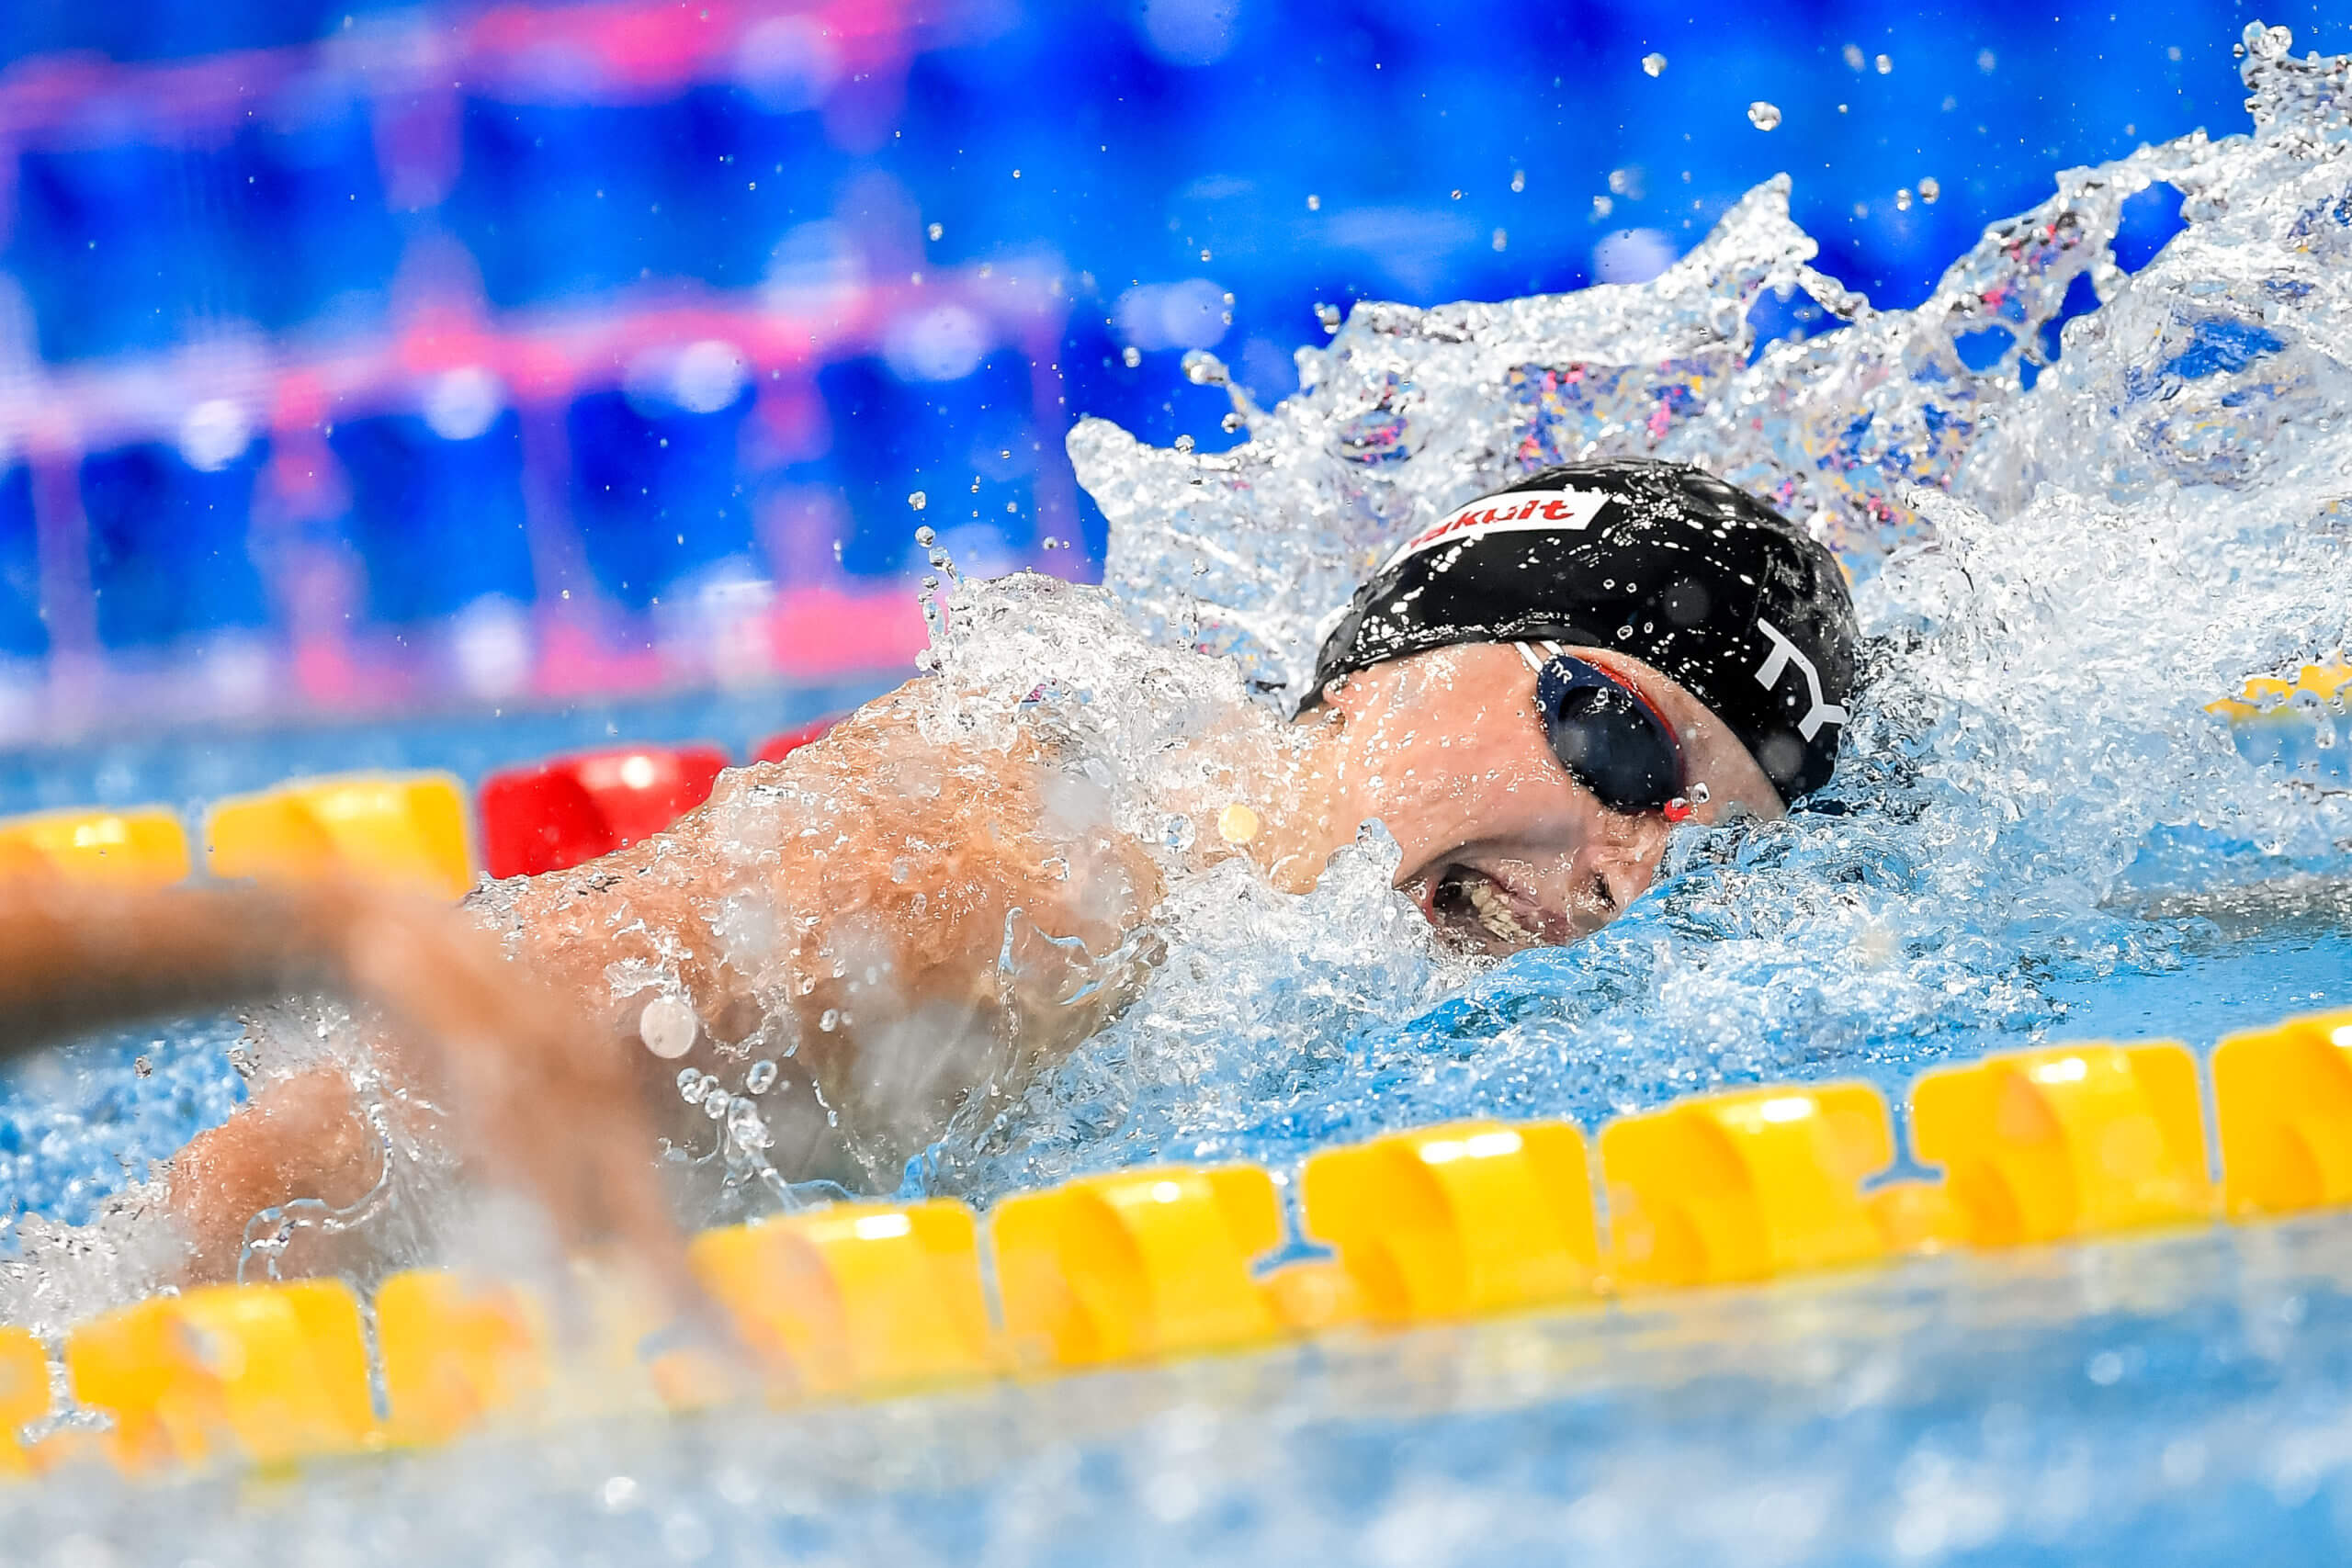 Google Says Katie Ledecky's The Greatest Female Swimmer Of All